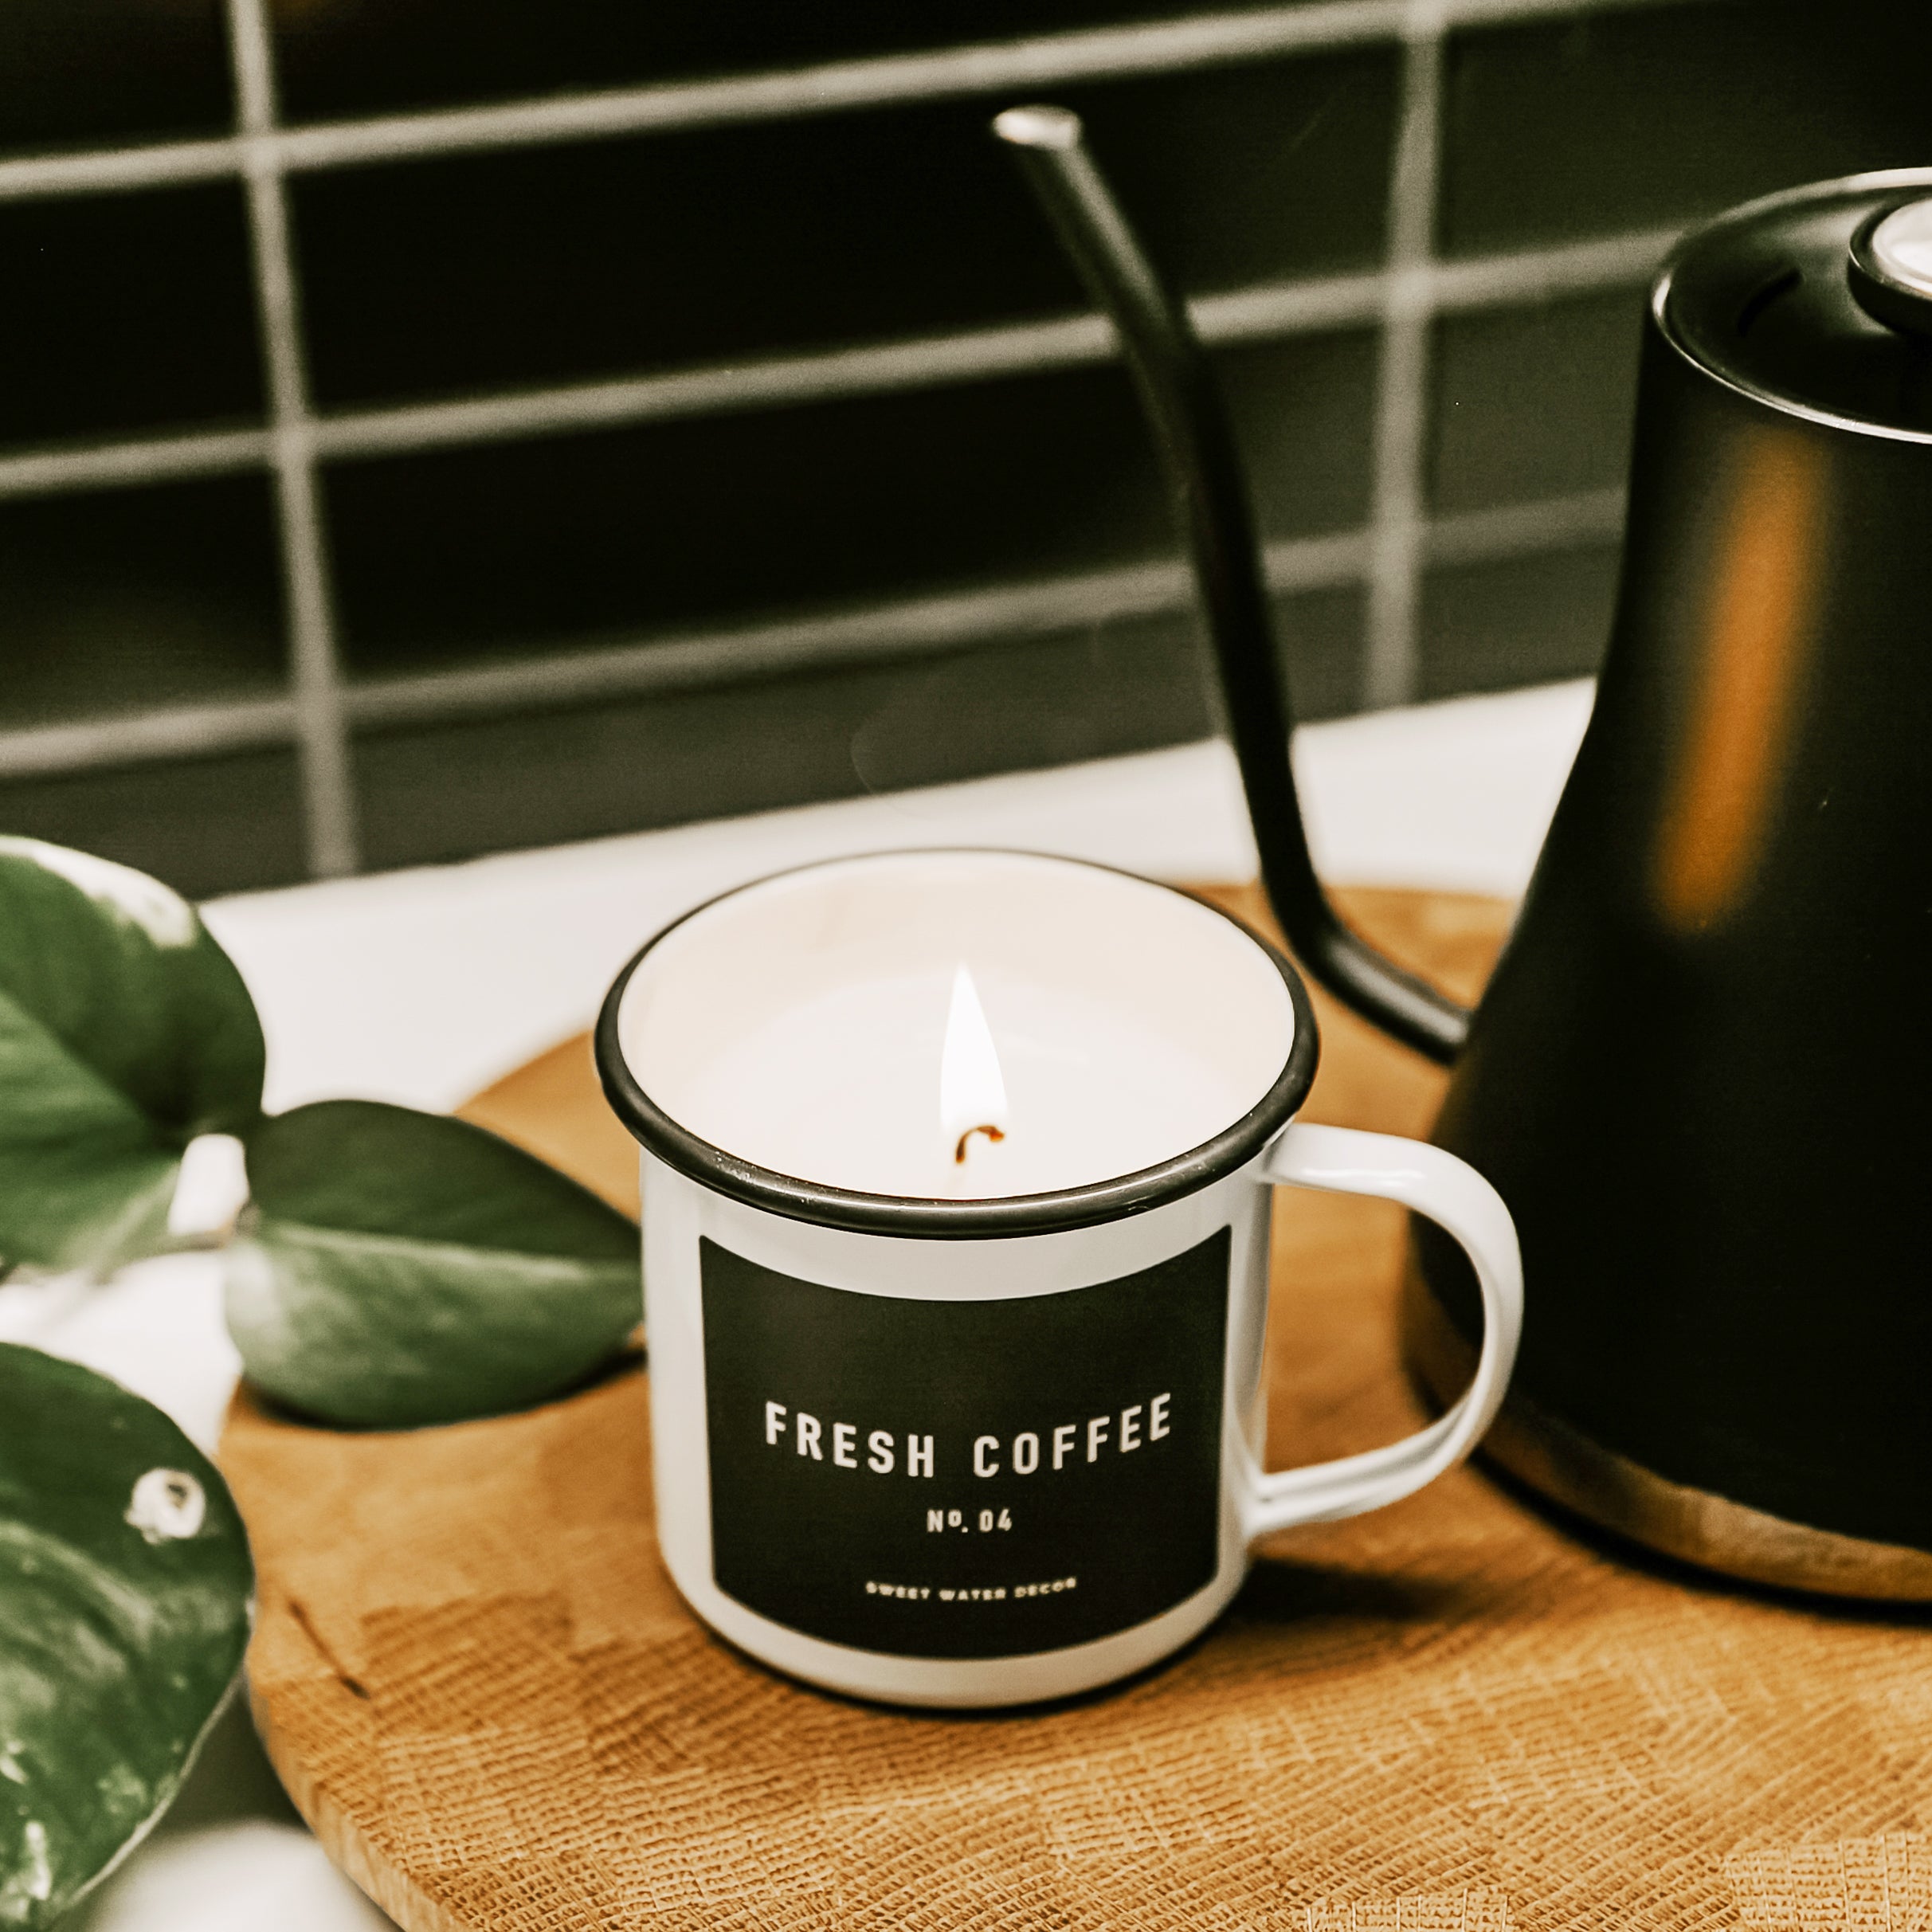 White Coffee Mug 11 oz Candle in Fresh Coffee Scent